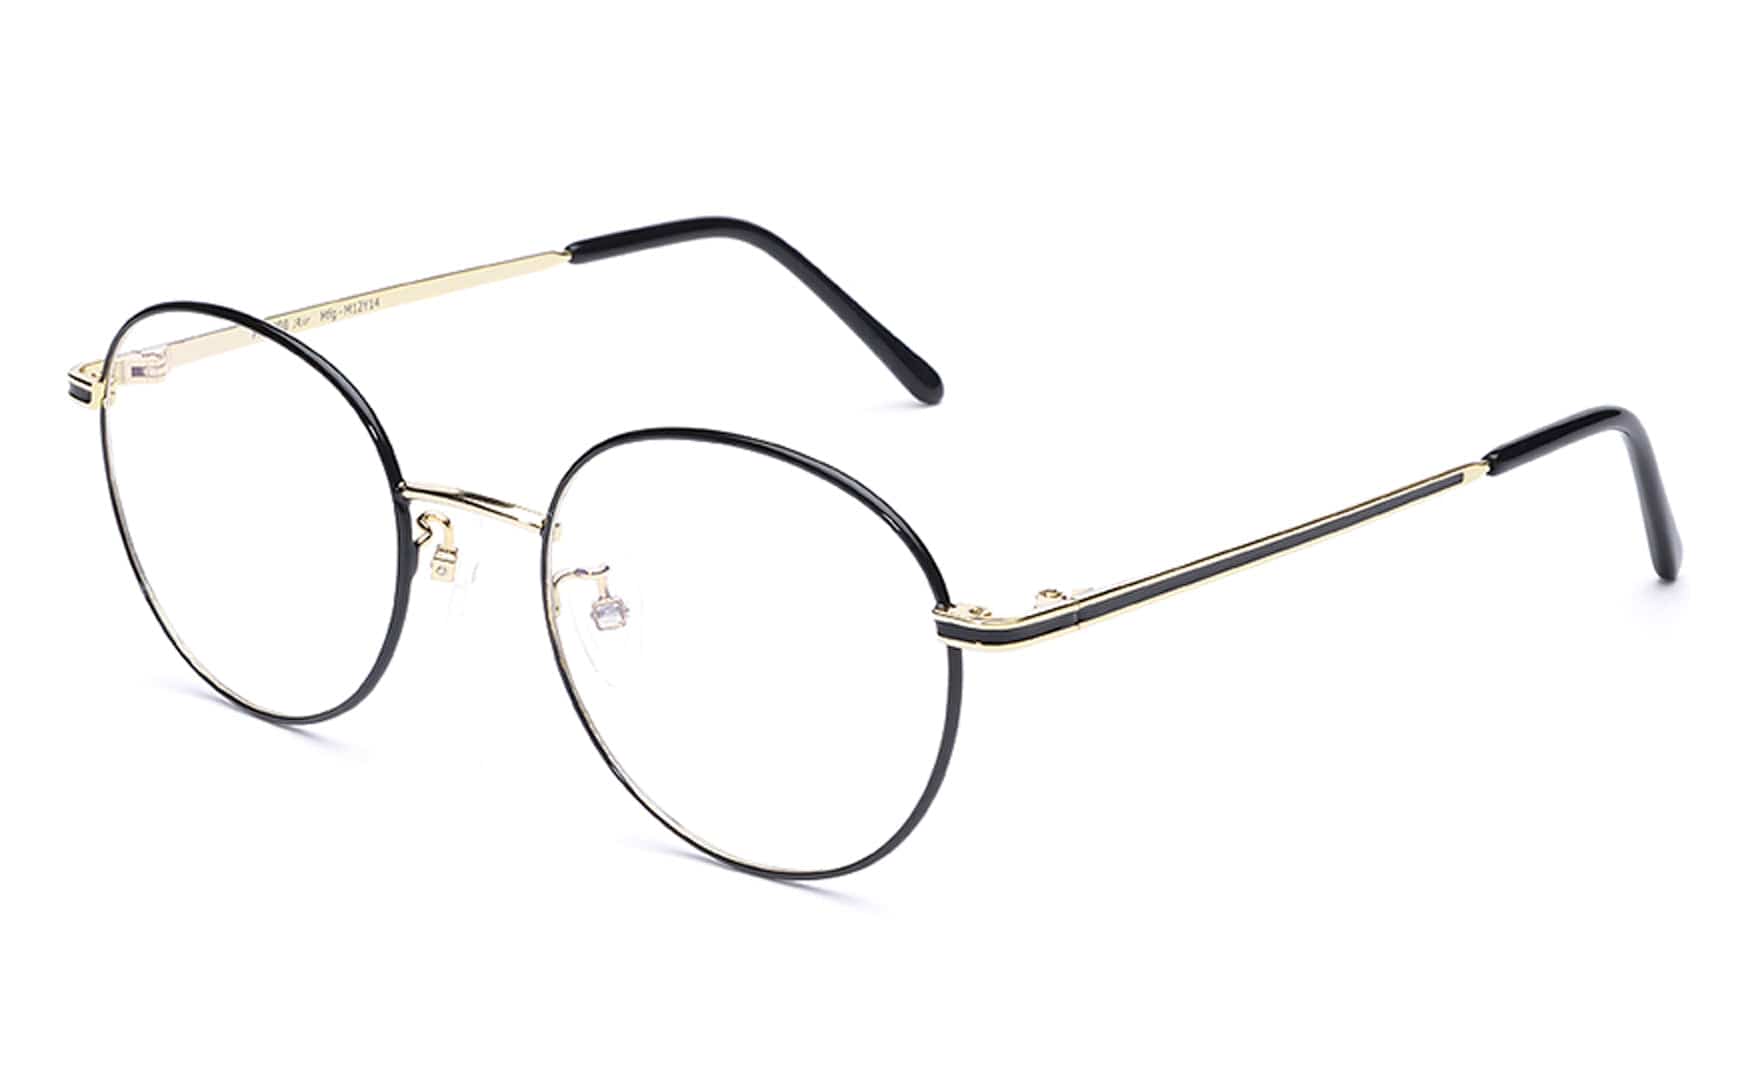 Carrera Eyewear: The Story Of The Legendary Brand | 1001 Optical